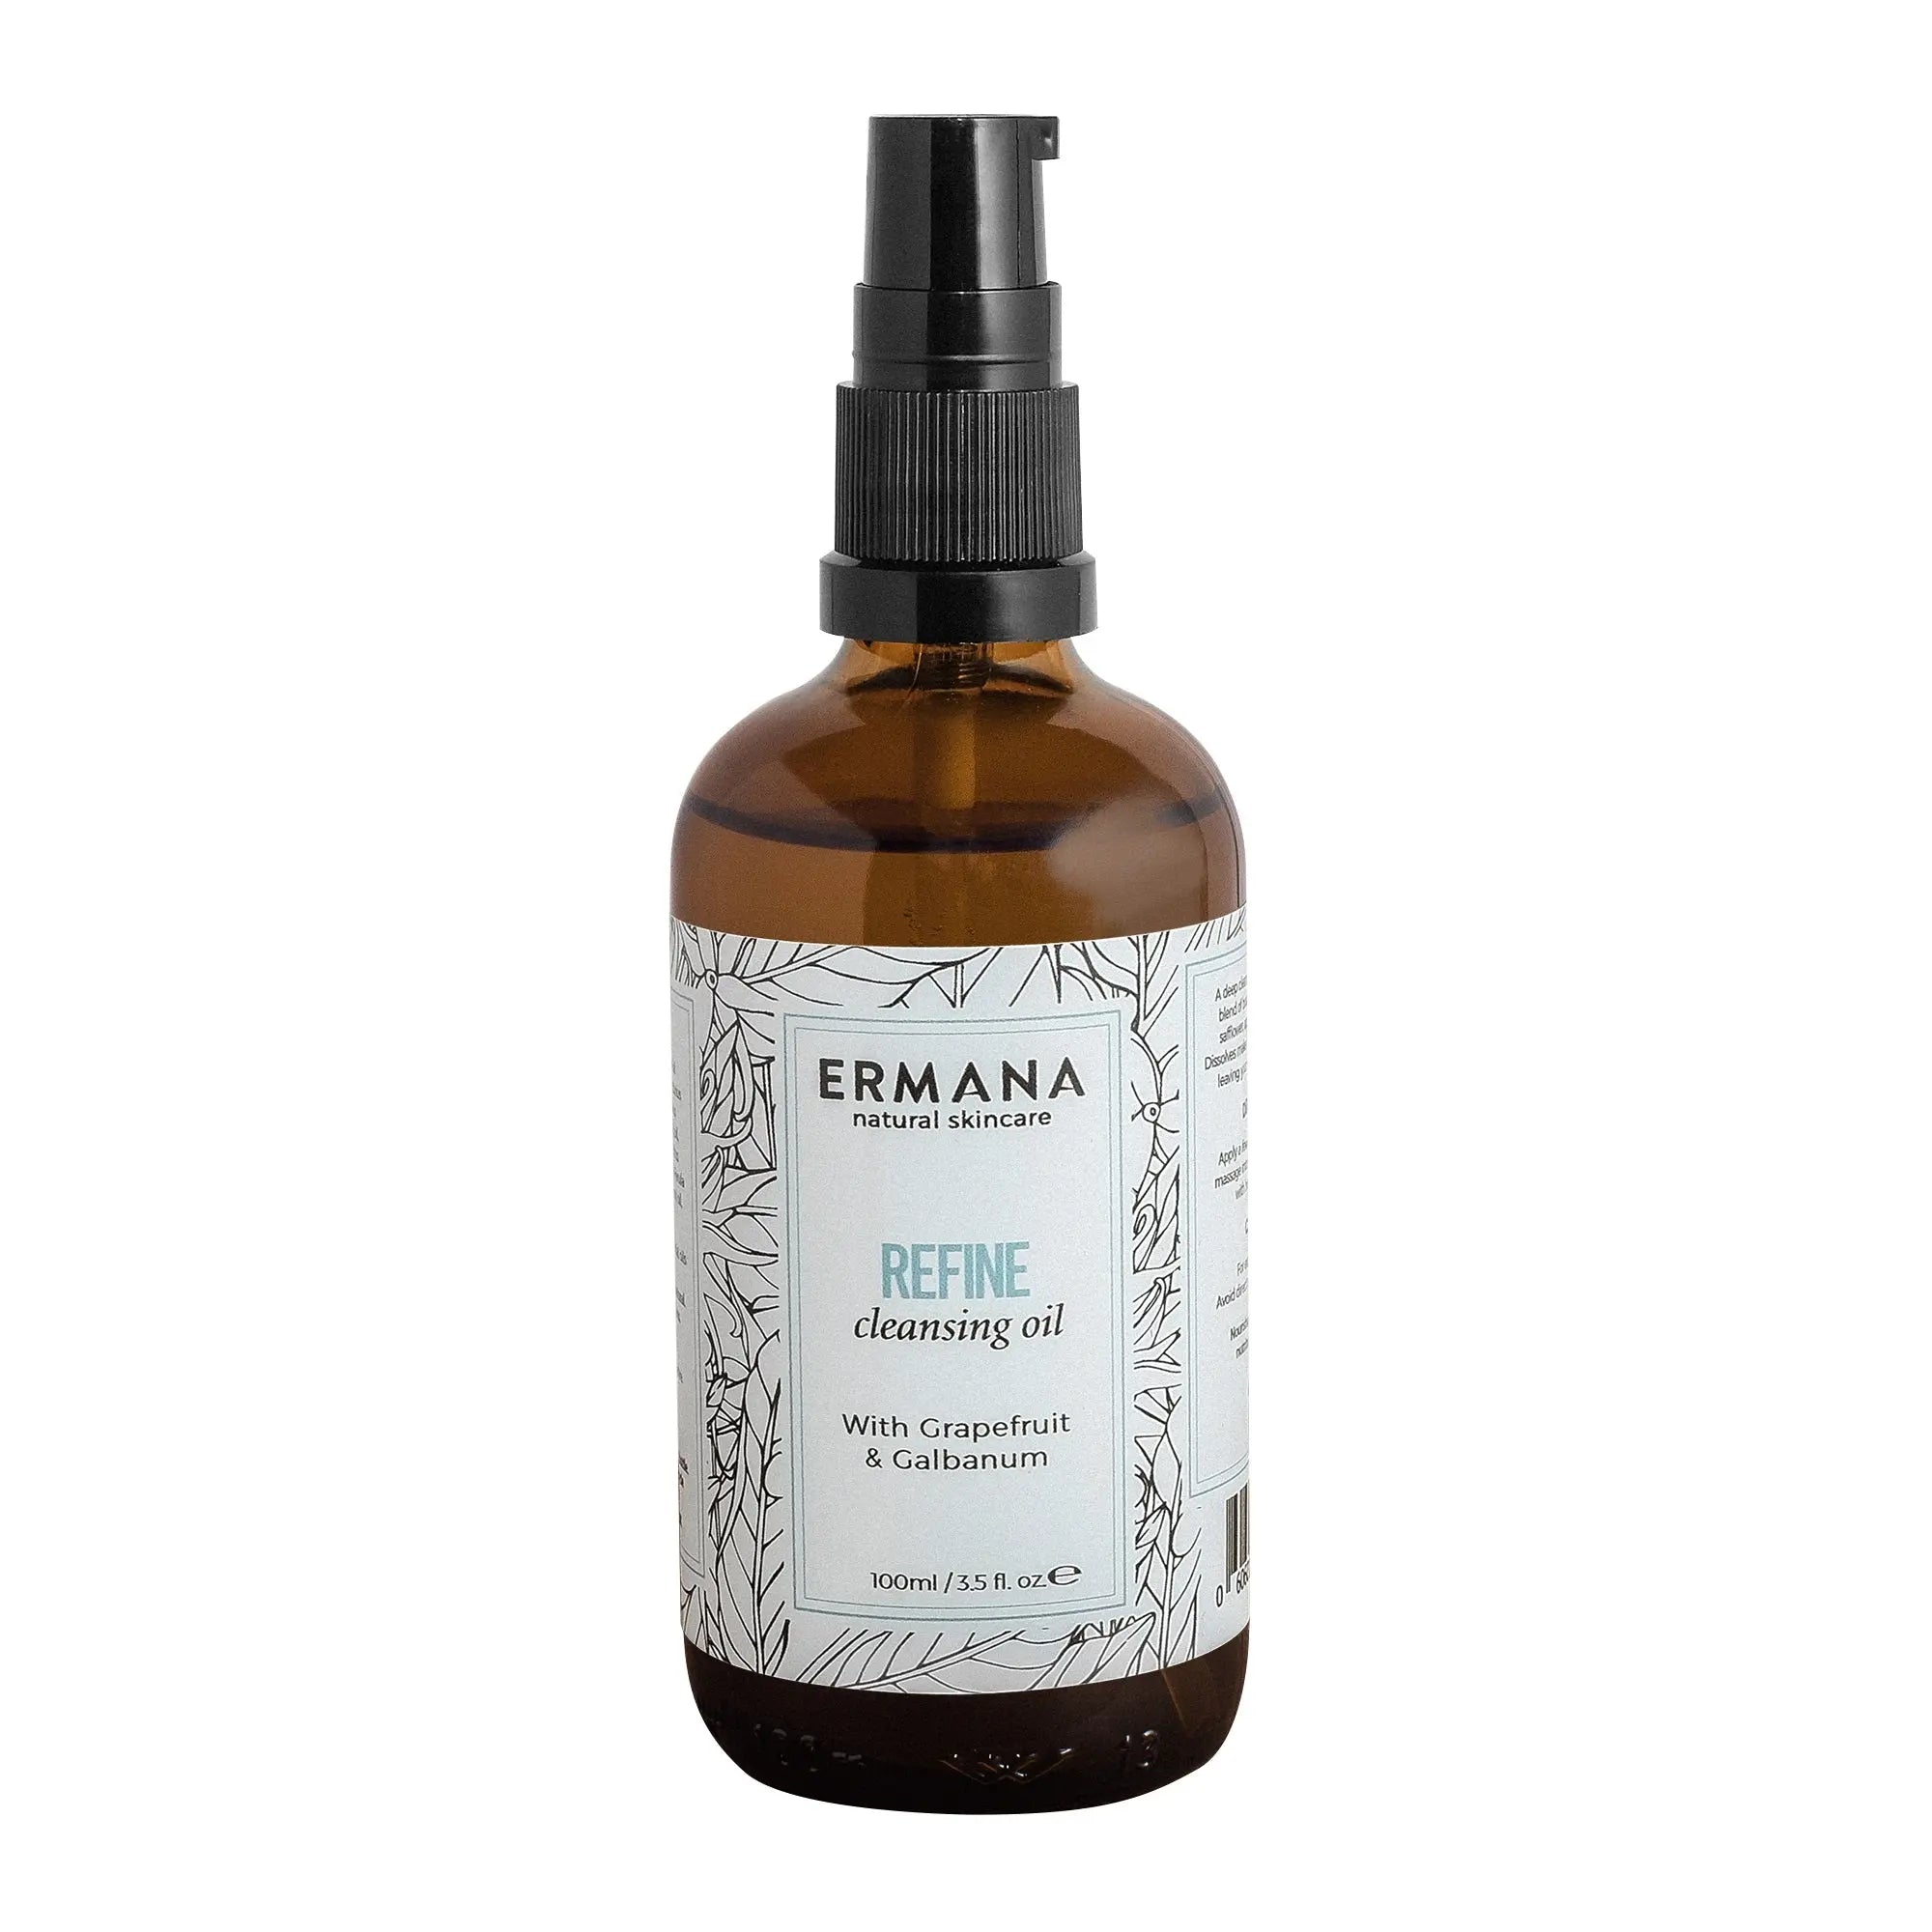 Refine Cleansing Oil 100ml - Ermana Natural Skincare 